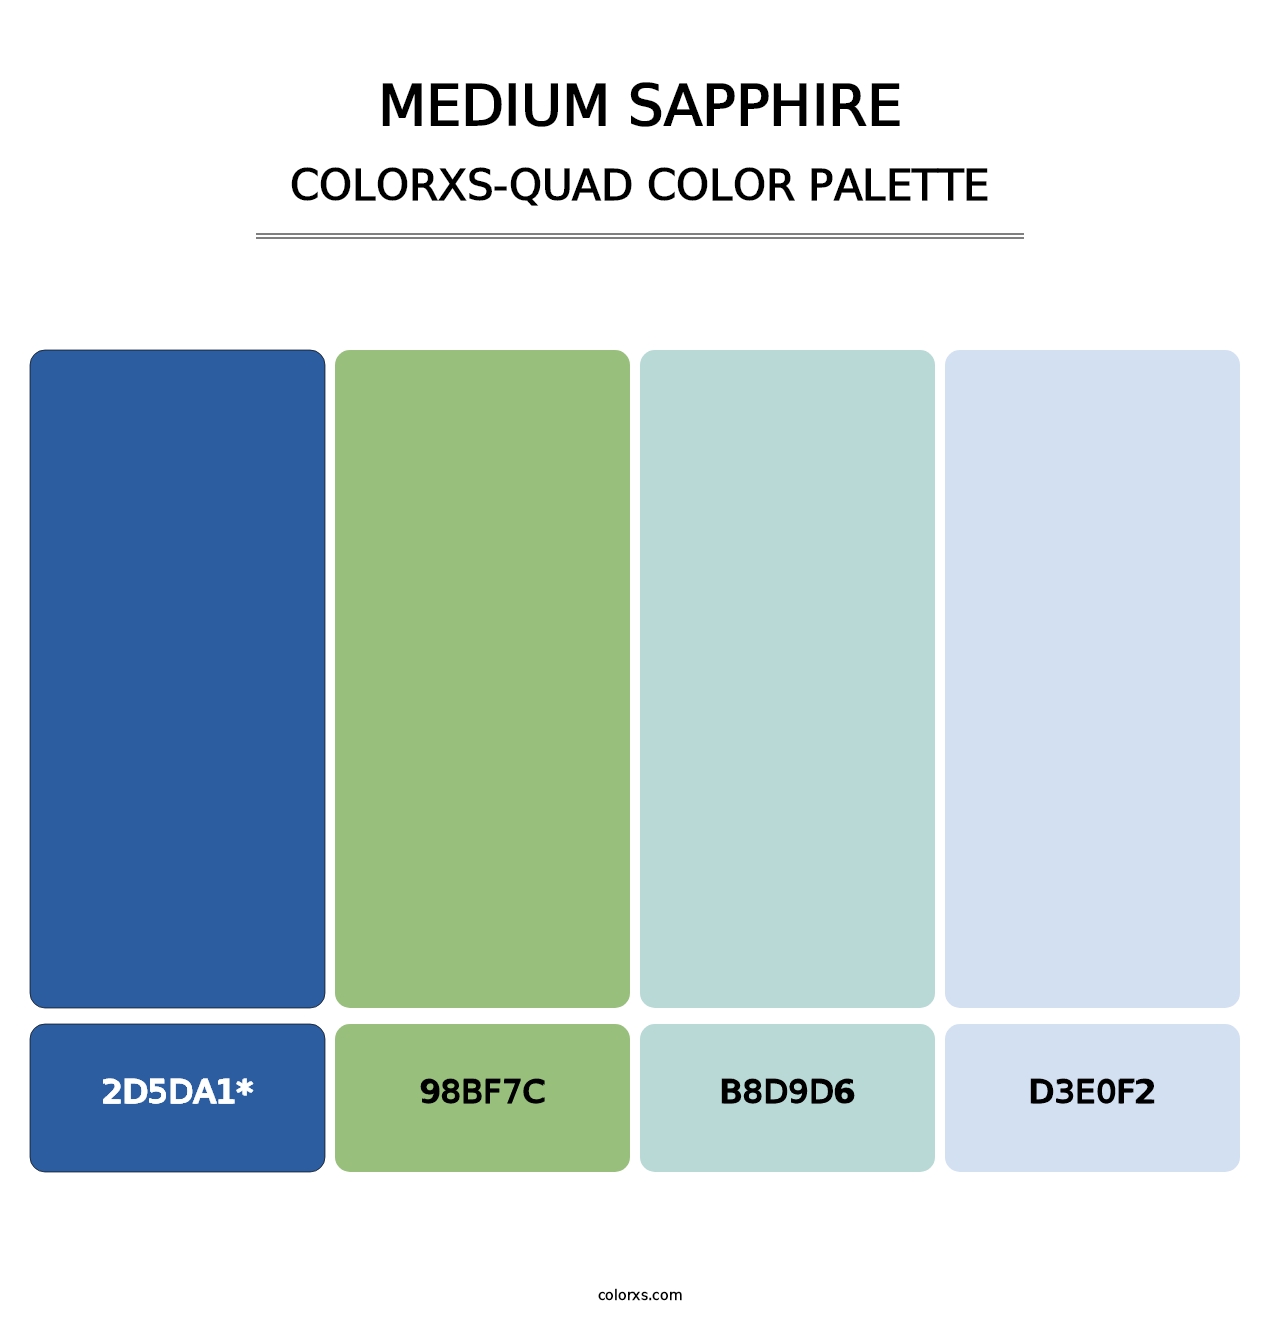 Medium Sapphire - Colorxs Quad Palette